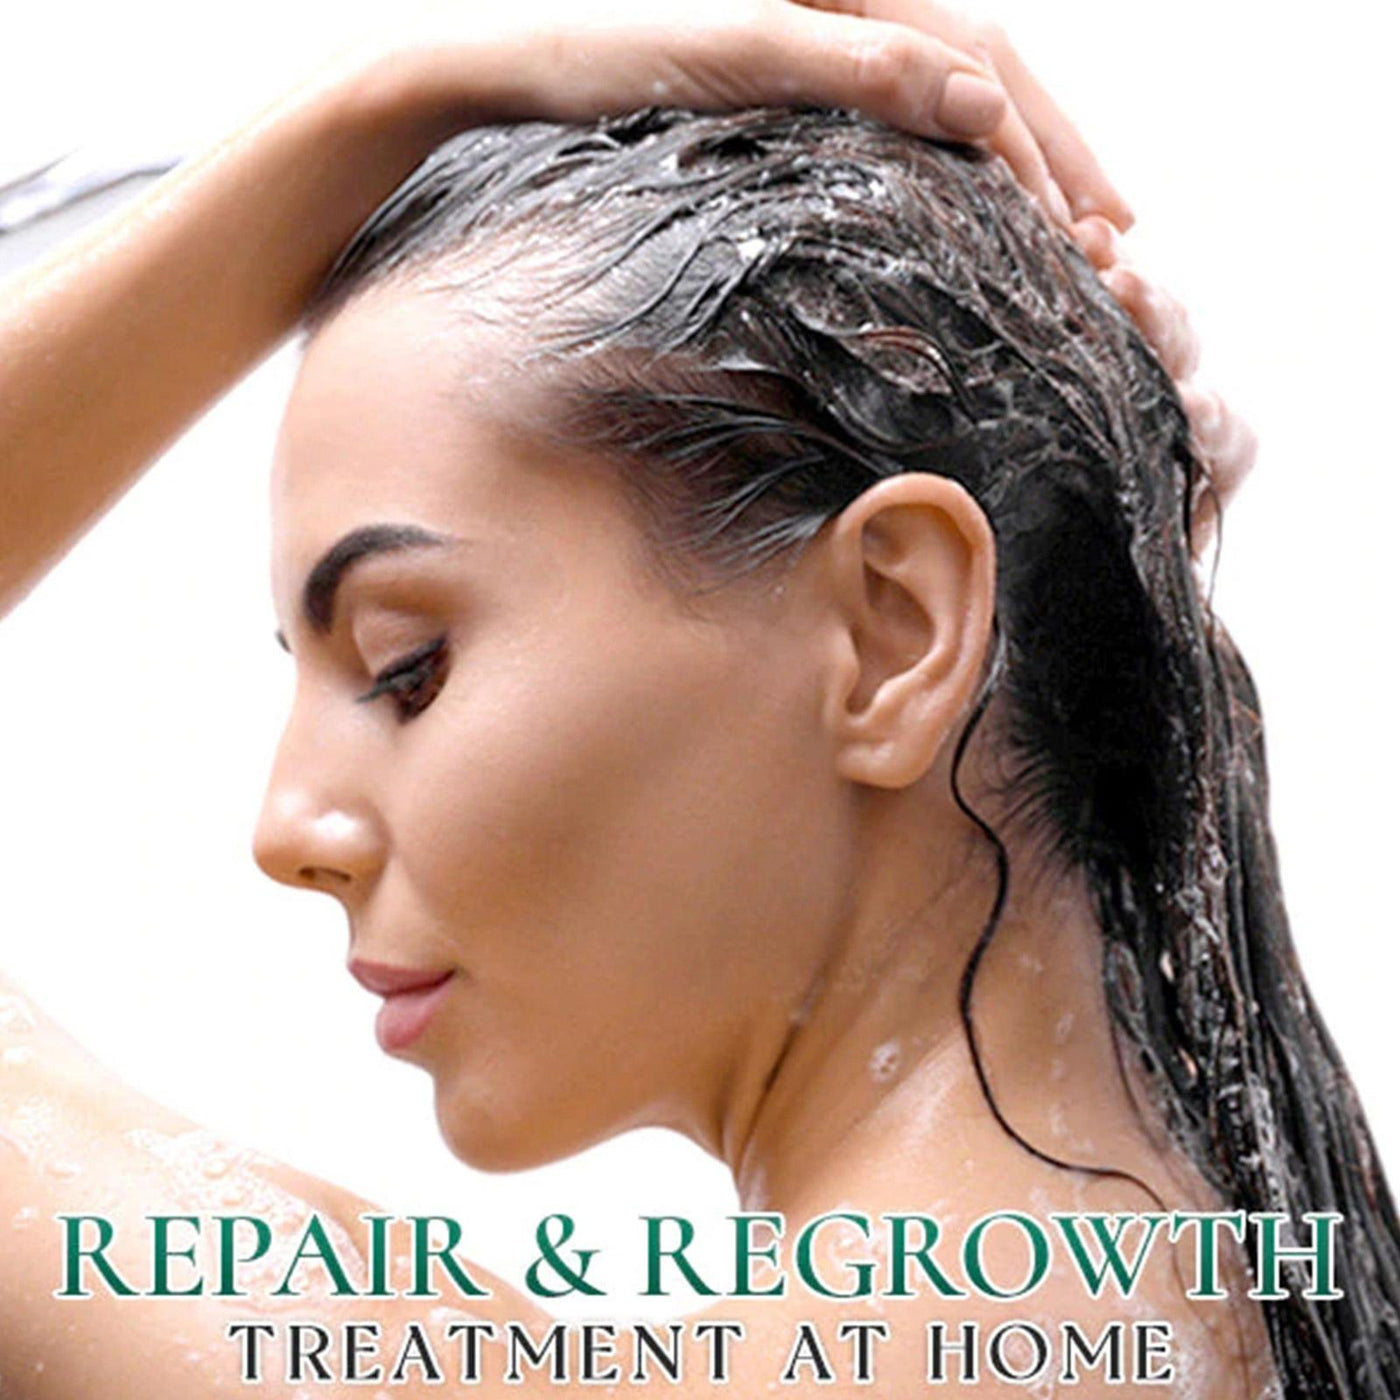 HairPure™ ReGrowth Centella Purifying Scrub 1+1 GRATIS